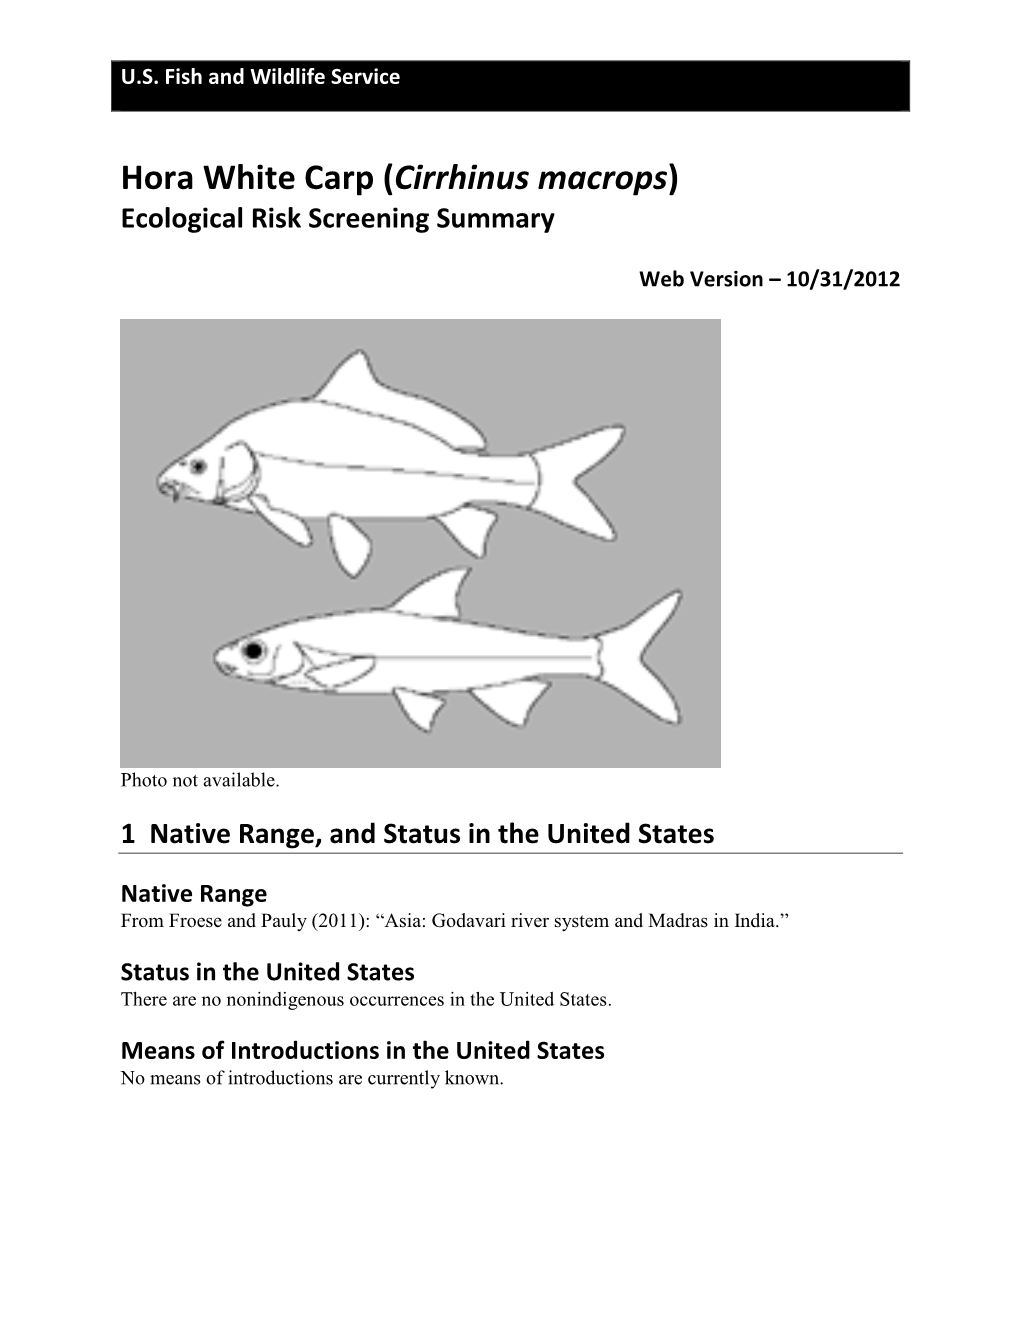 Carp, Hora White (Cirrhinus Macrops)